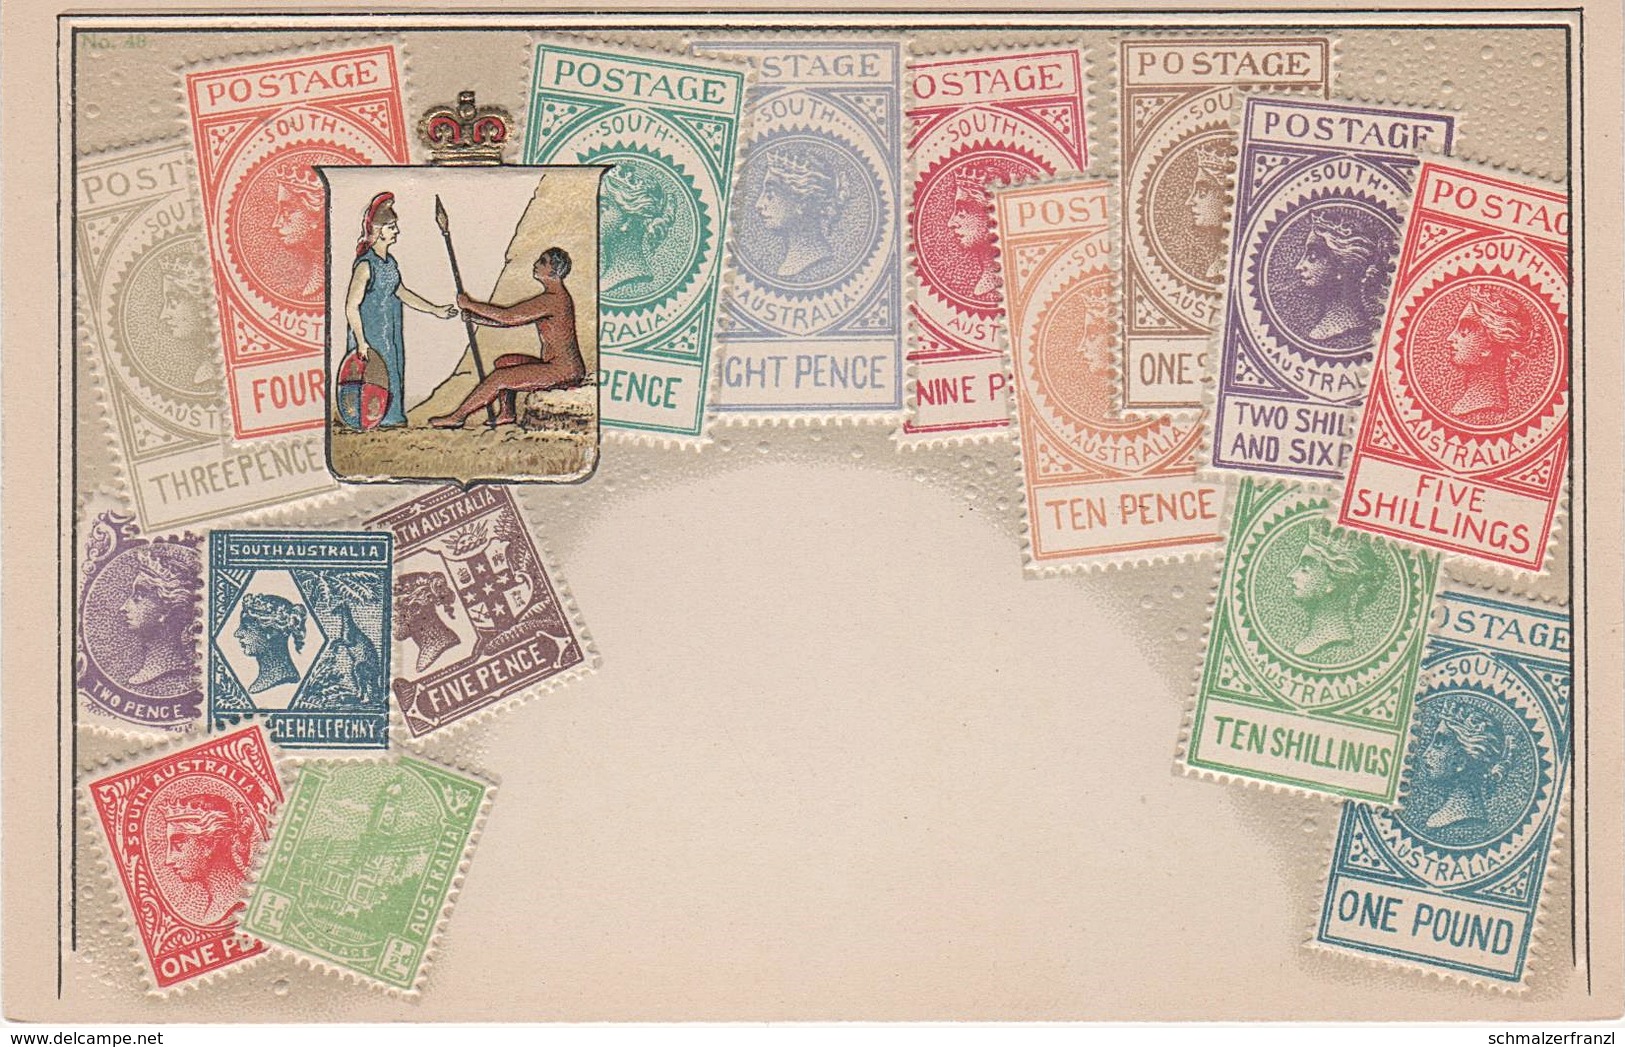 Philatelie Litho AK South Australia SA A Adelaide Mount Gambier Gawler Australien Australie Briefmarke Stamp Timbre - Adelaide